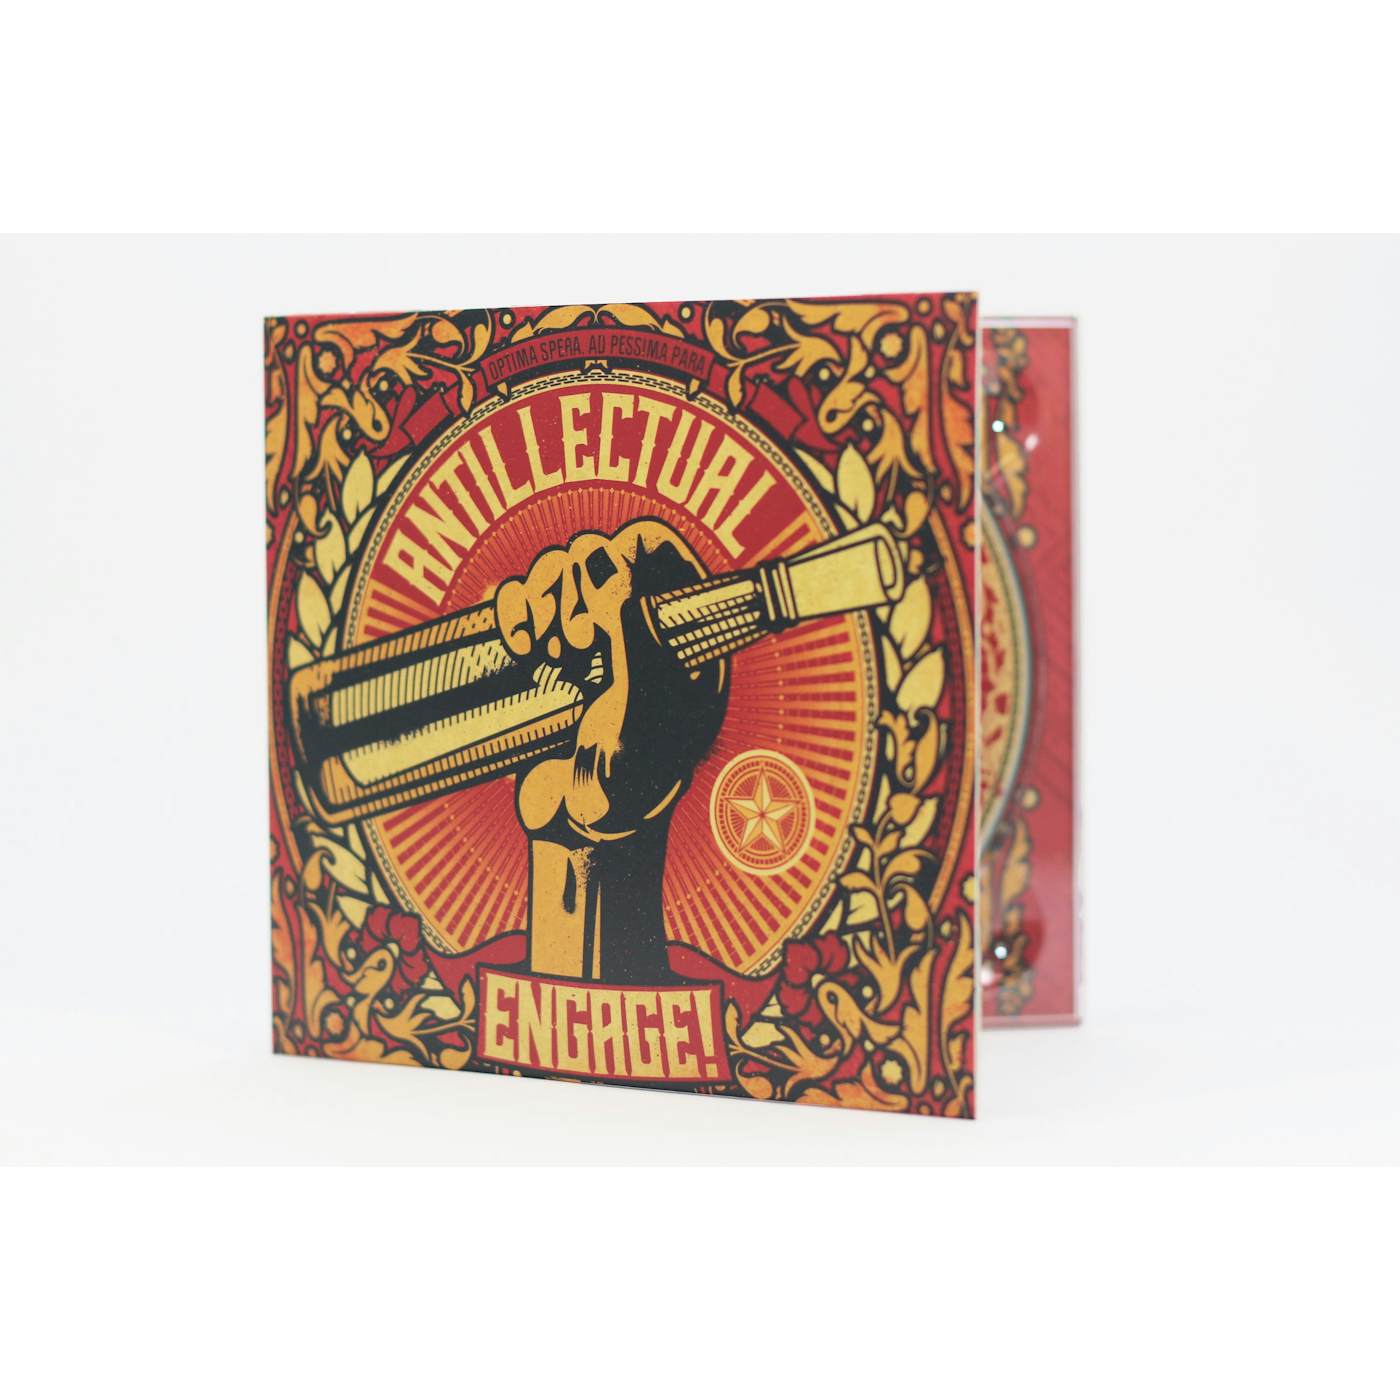 Antillectual - ENGAGE! - CD (2016)